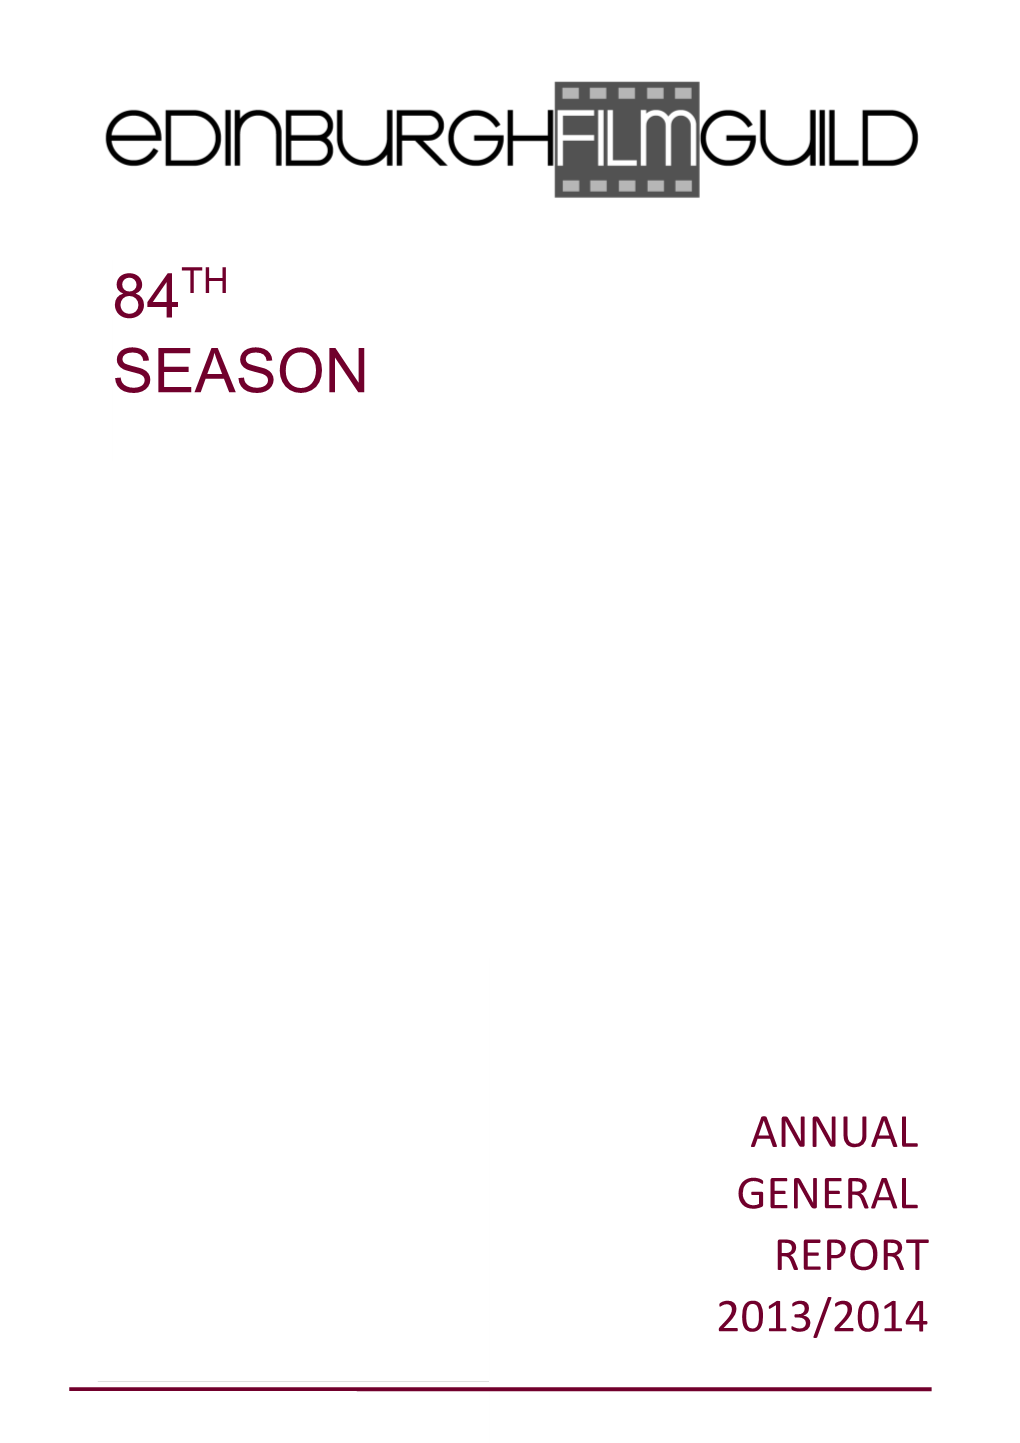 This Annual Report Covers the Edinburgh Film Guild Season 2013/2014